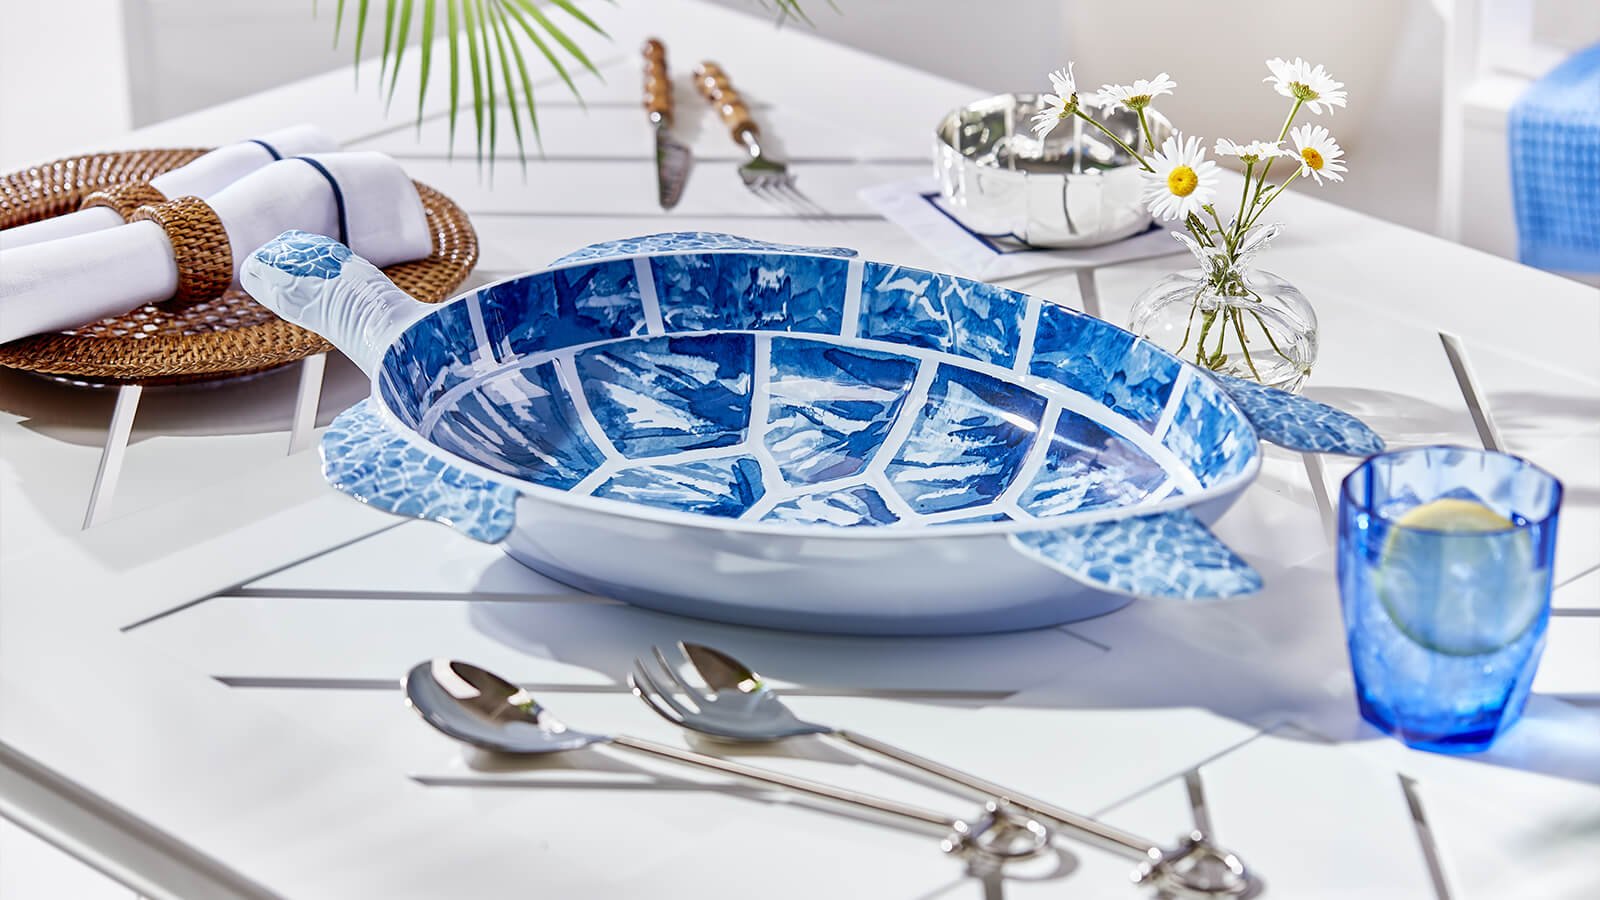 Serving bowls for elegant table settings - Newport